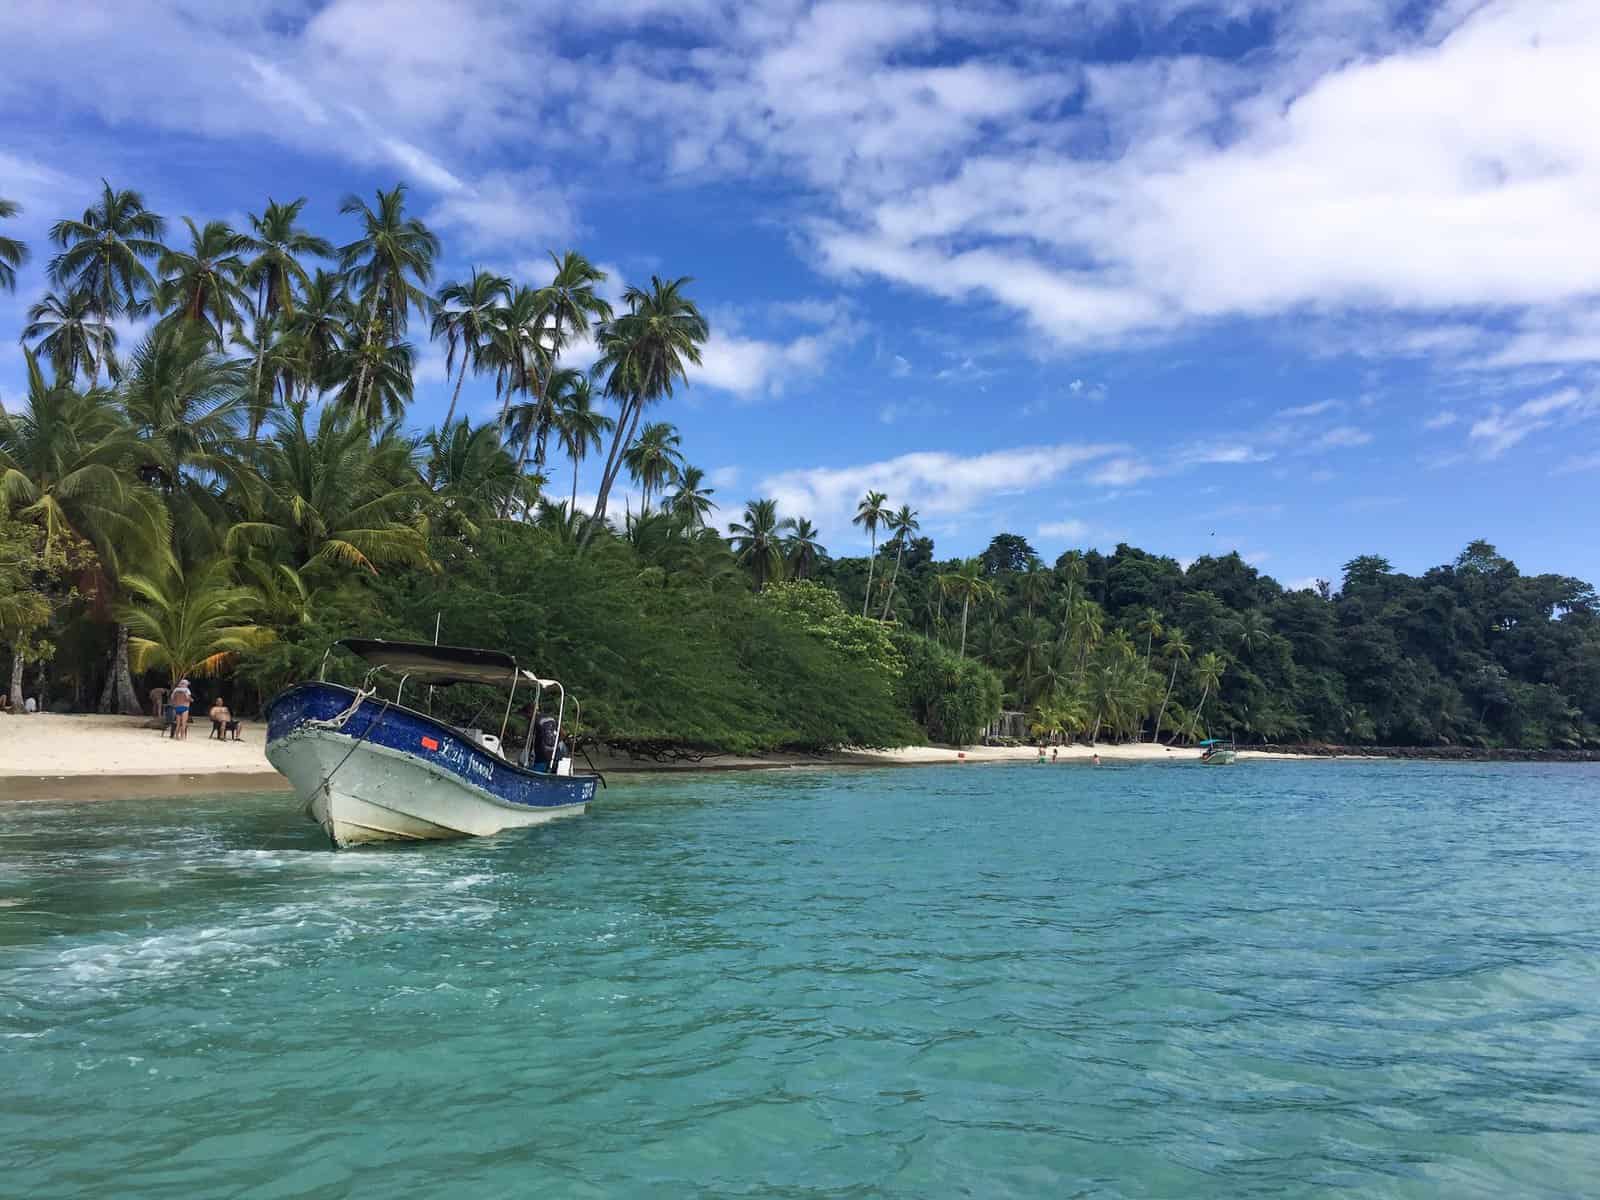 Coiba Island Panama